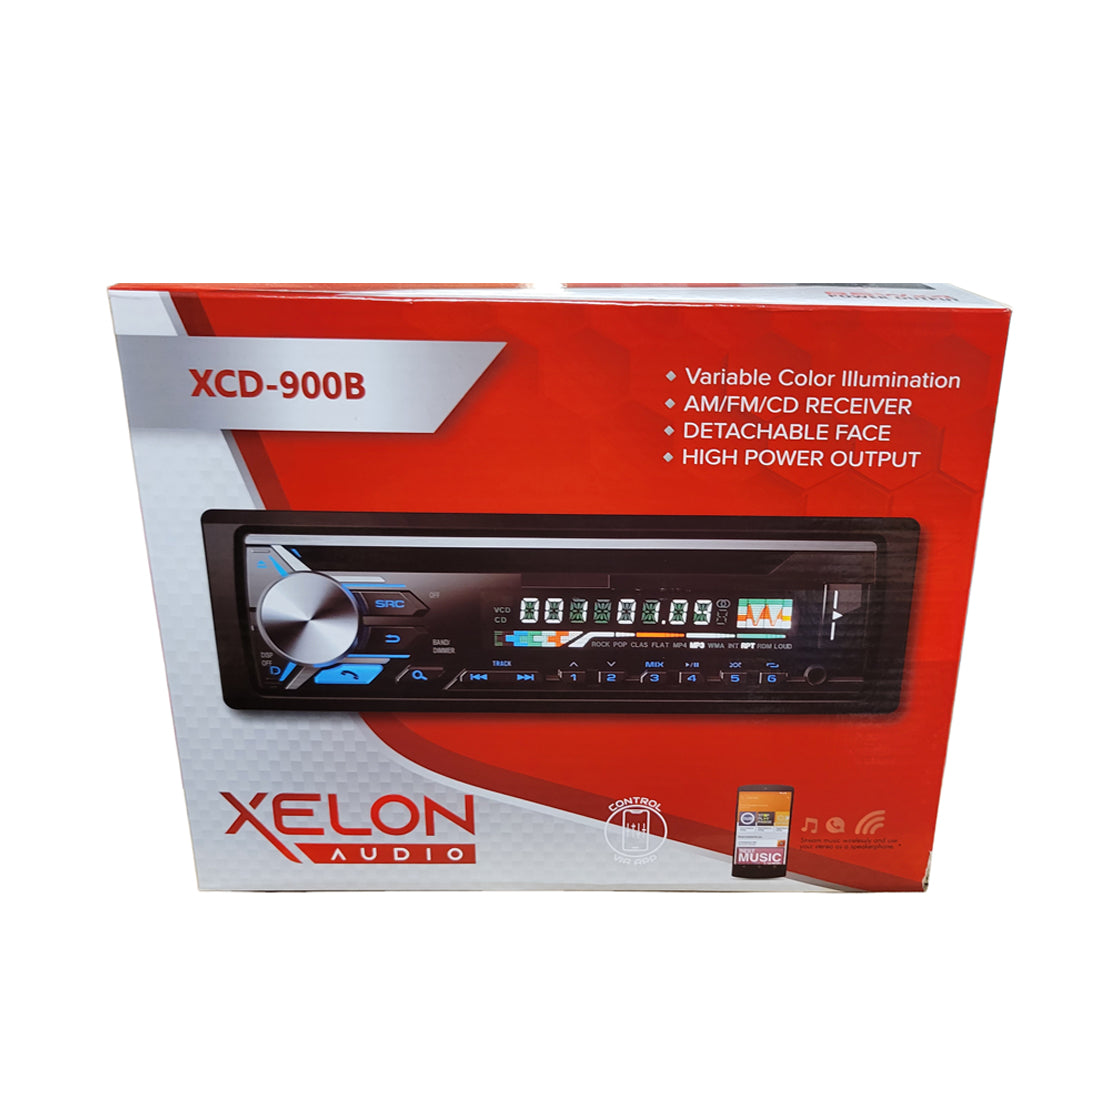 Xelon Audio XCD-900B 1-DIN CD/MP3/AM/FM Receiver w/ Variable Color Illumination